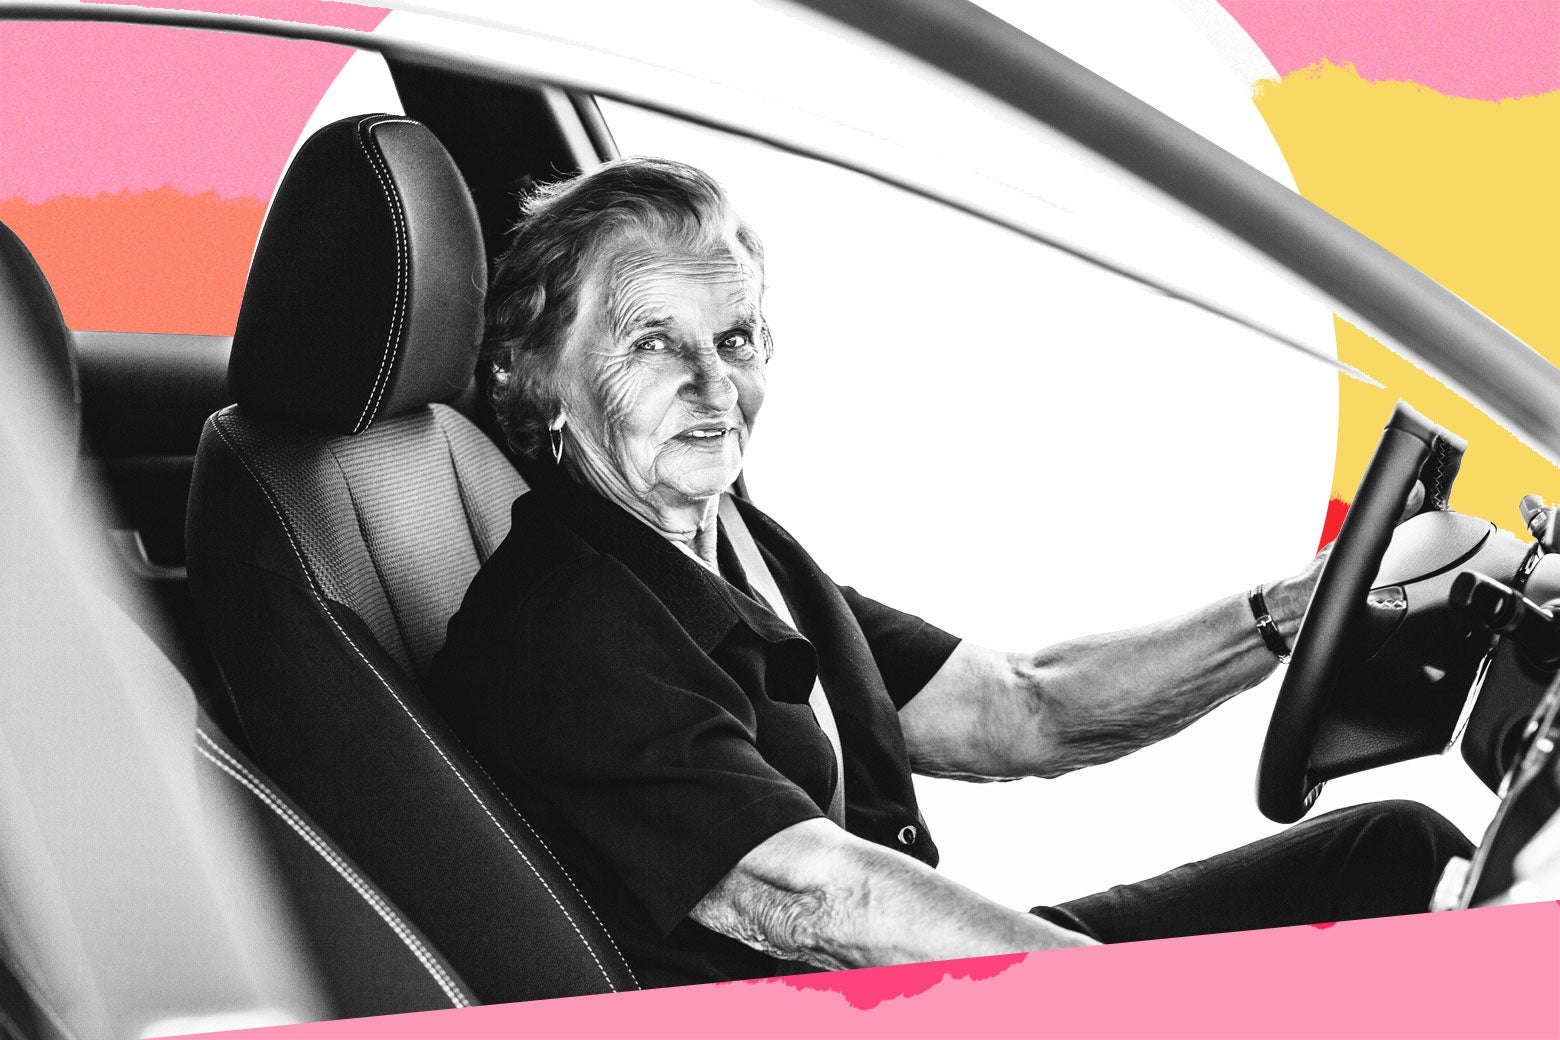 Grandma behind the wheel.